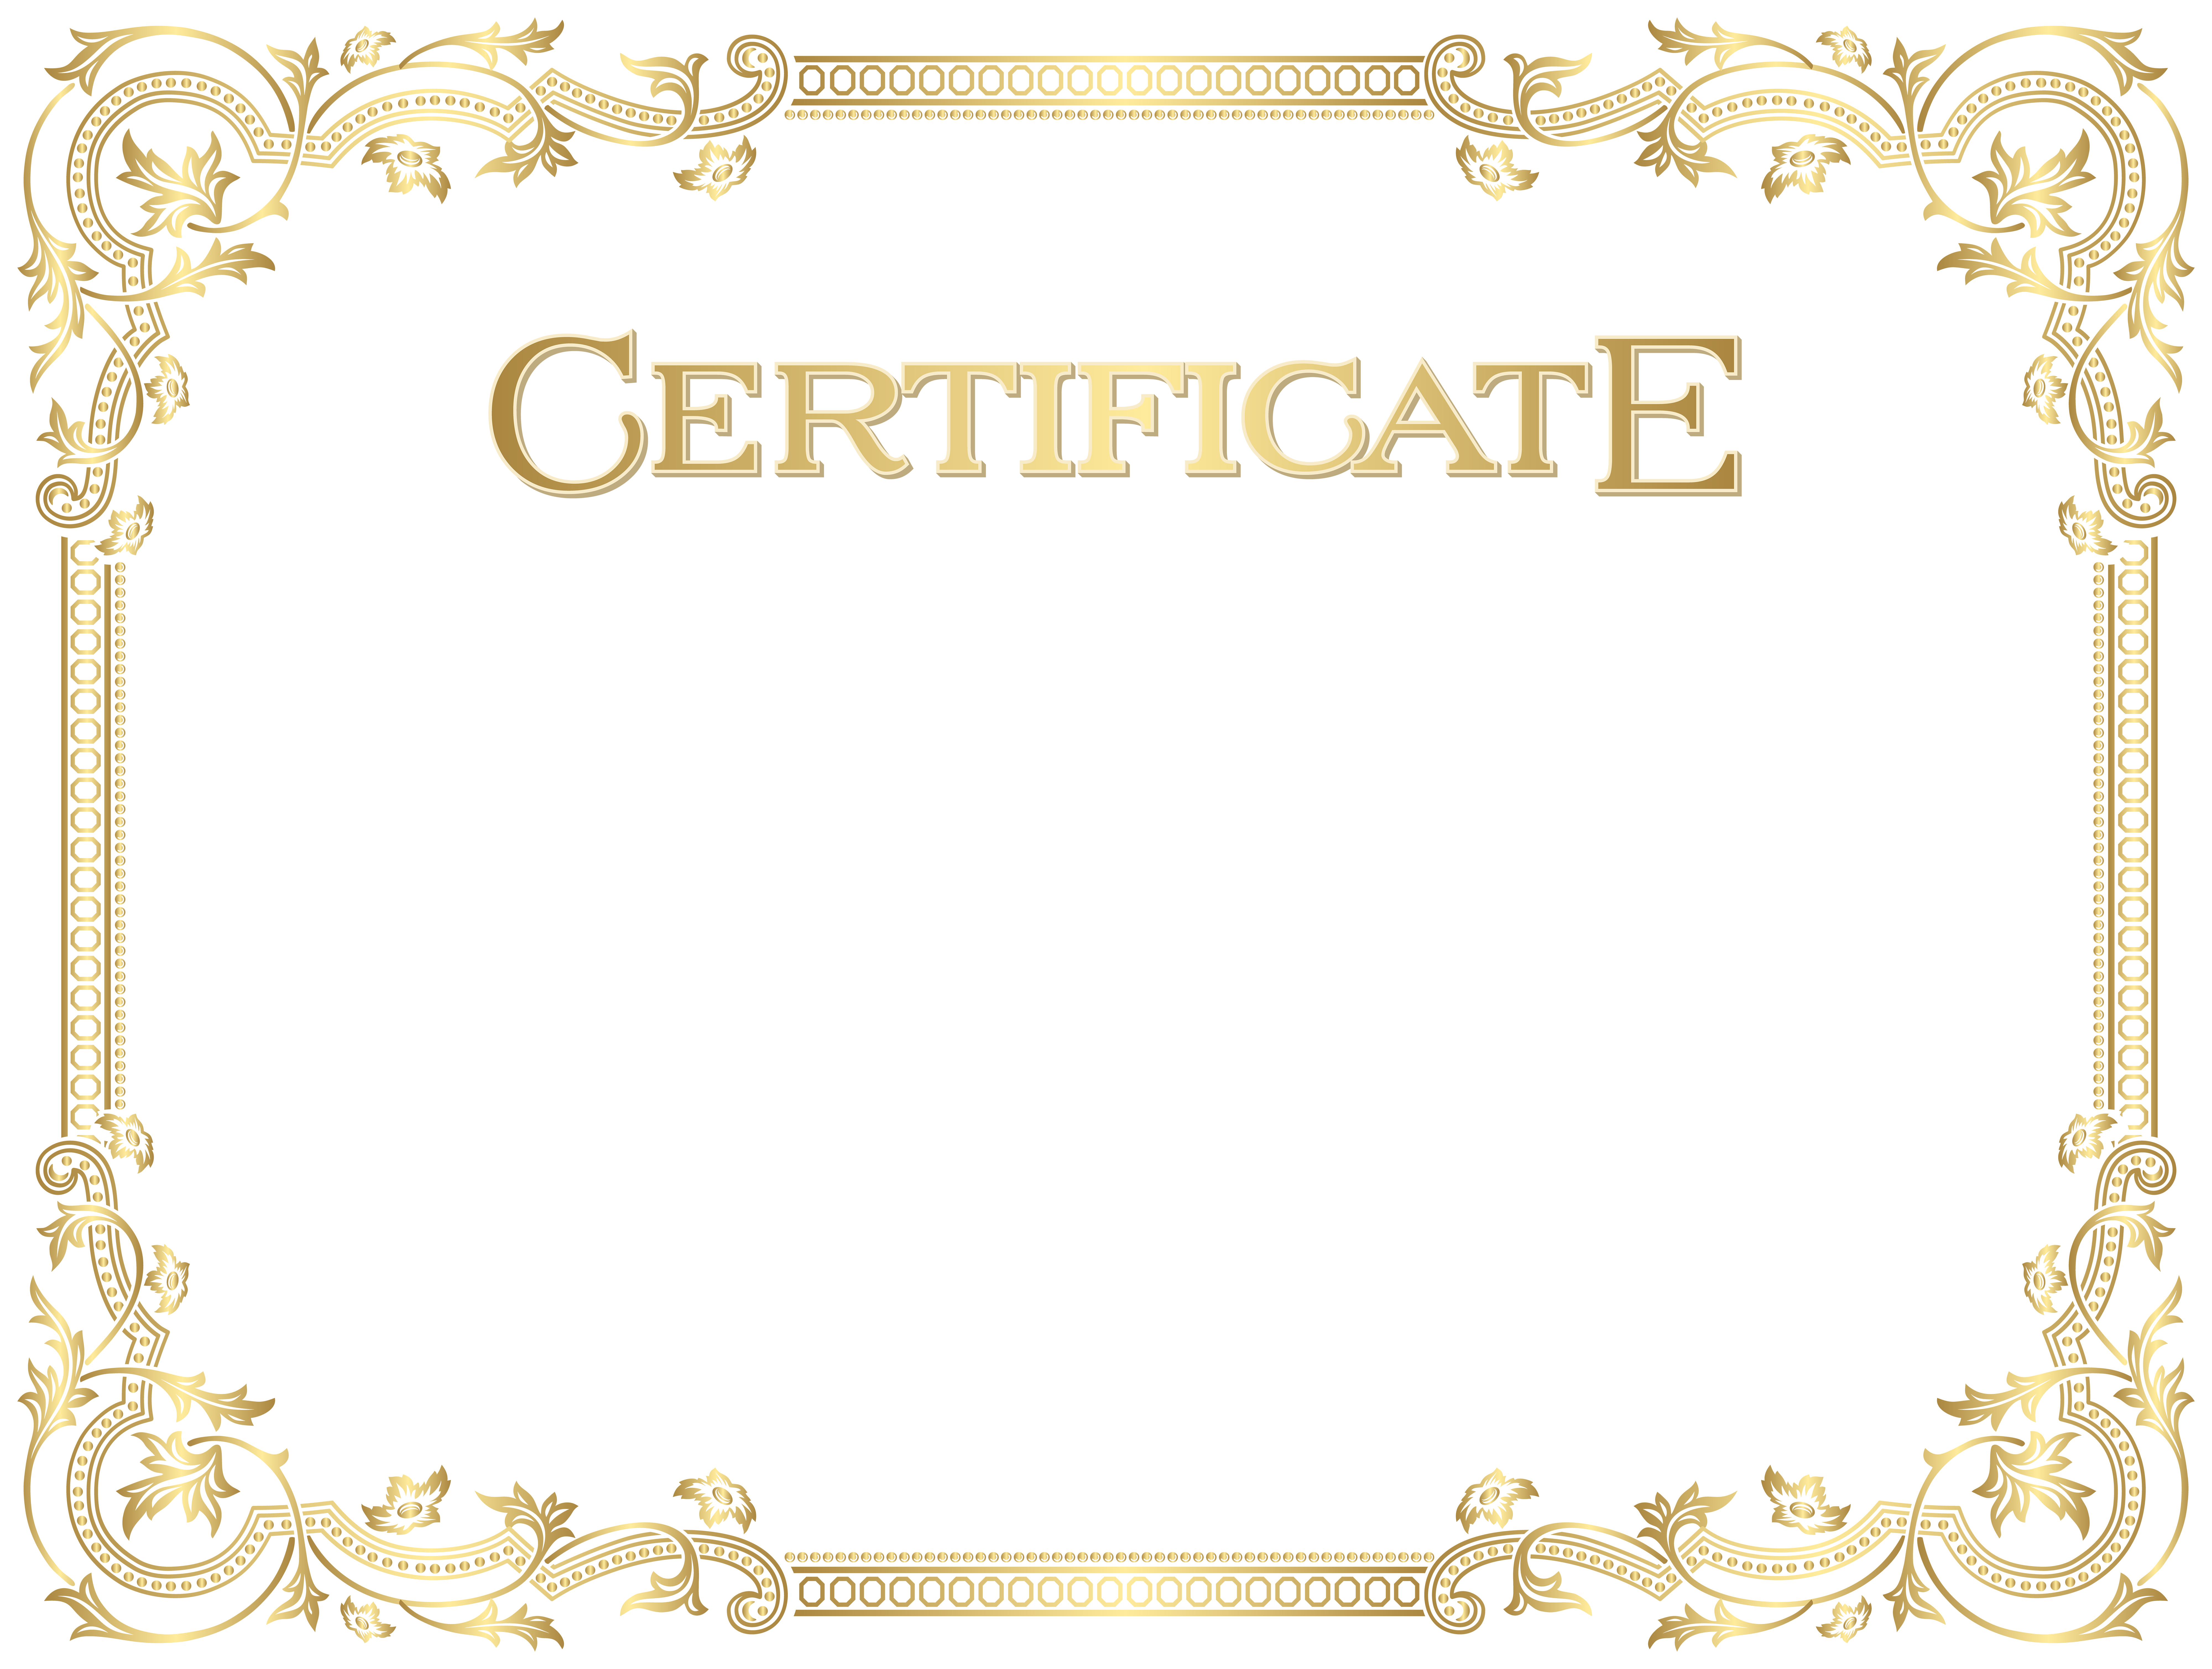 Certificate border template free - jesjapanese